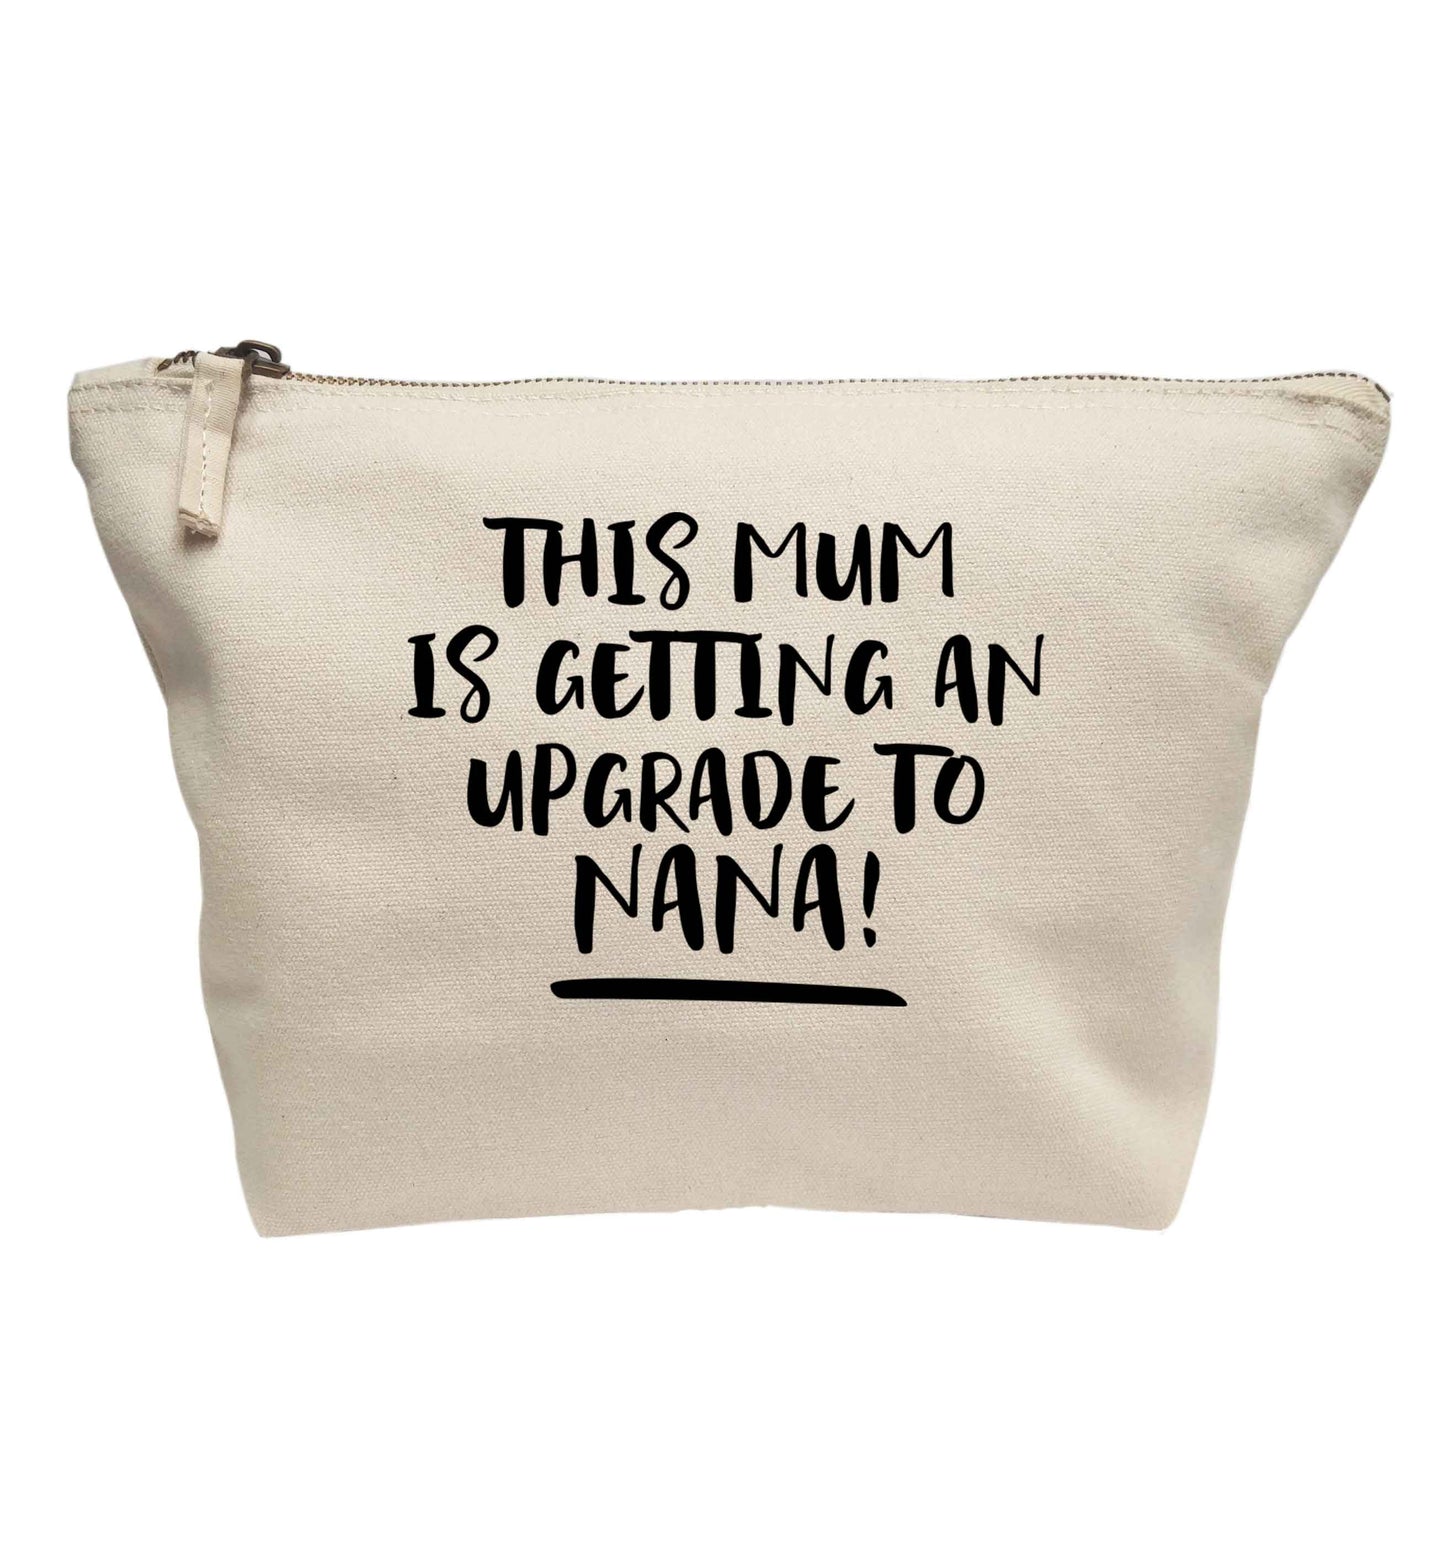 This mum is getting an upgrade to nana! | makeup / wash bag